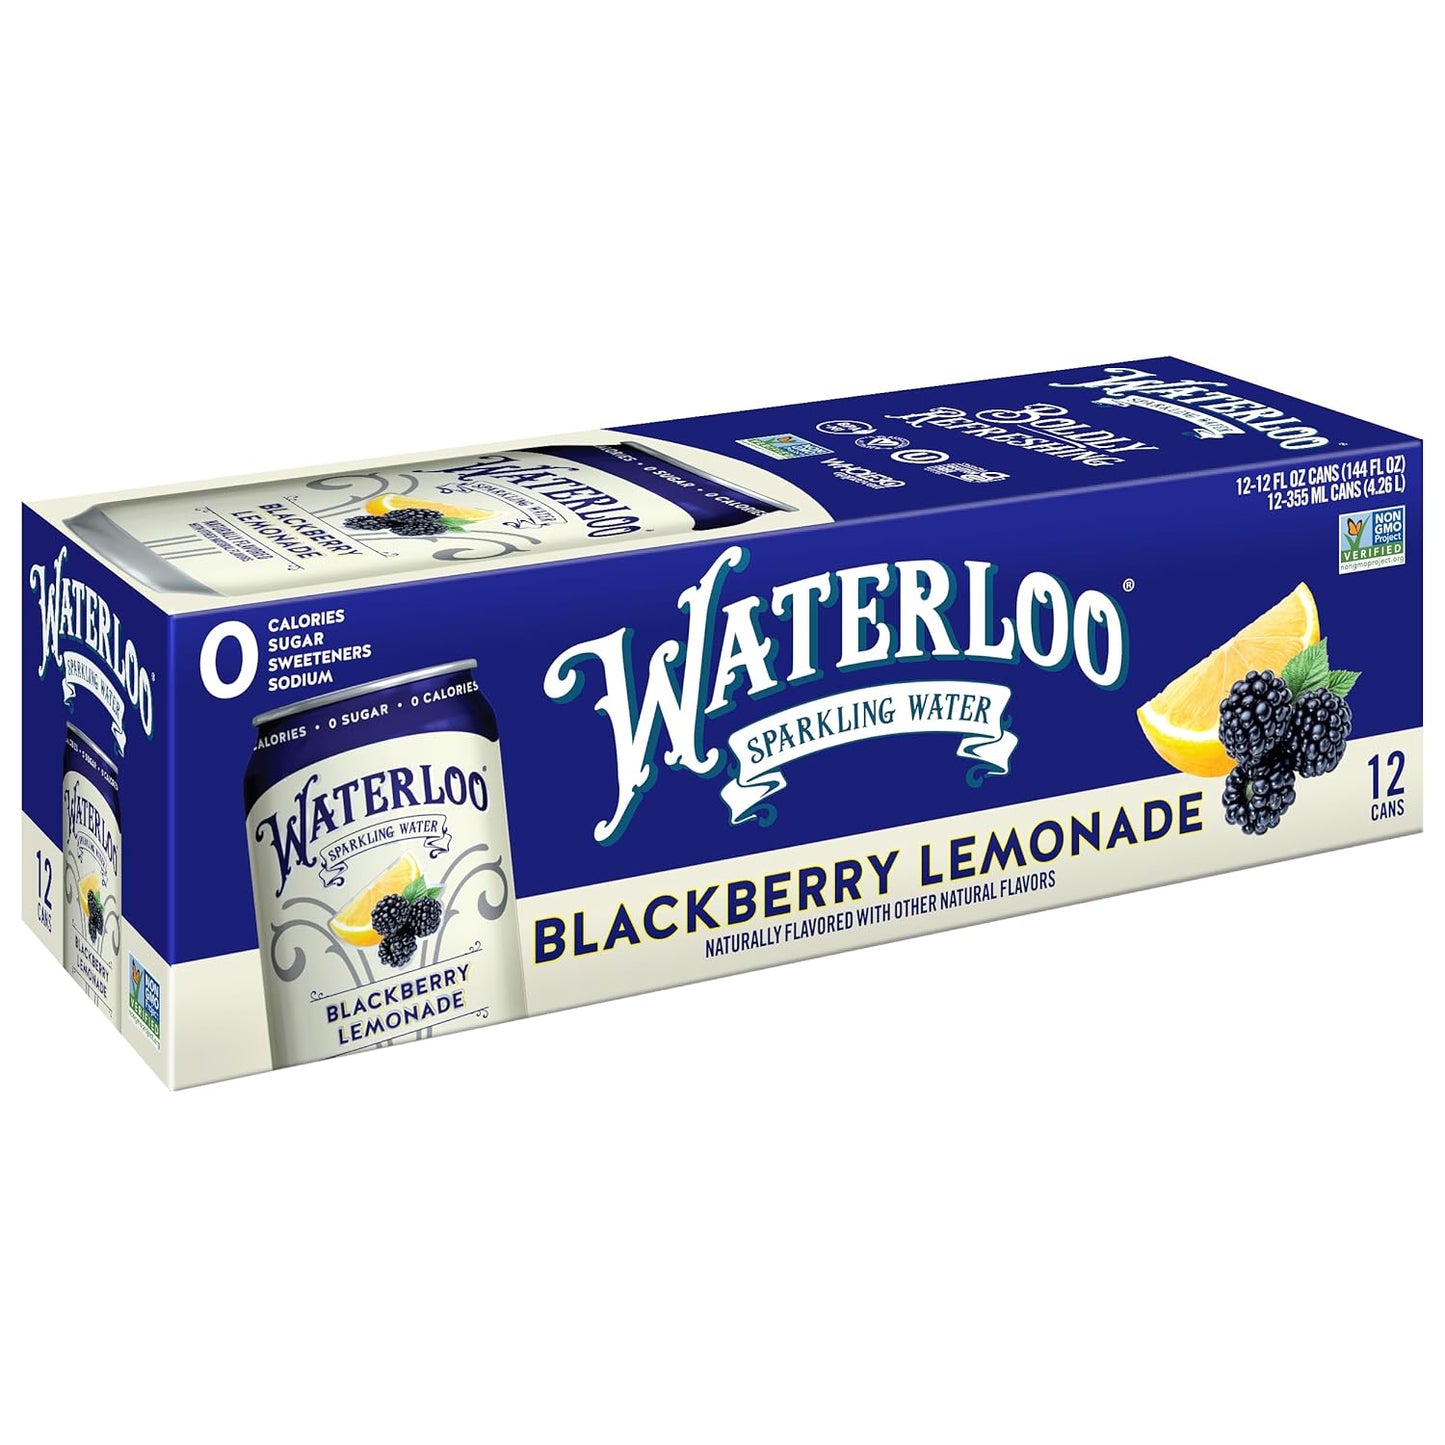 Waterloo Sparkling Water - 12 Oz Cans, Pack of 12 | Zero Calories | Zero Sugar - Zero Artificial Sweeteners | - Imported - Wholesale